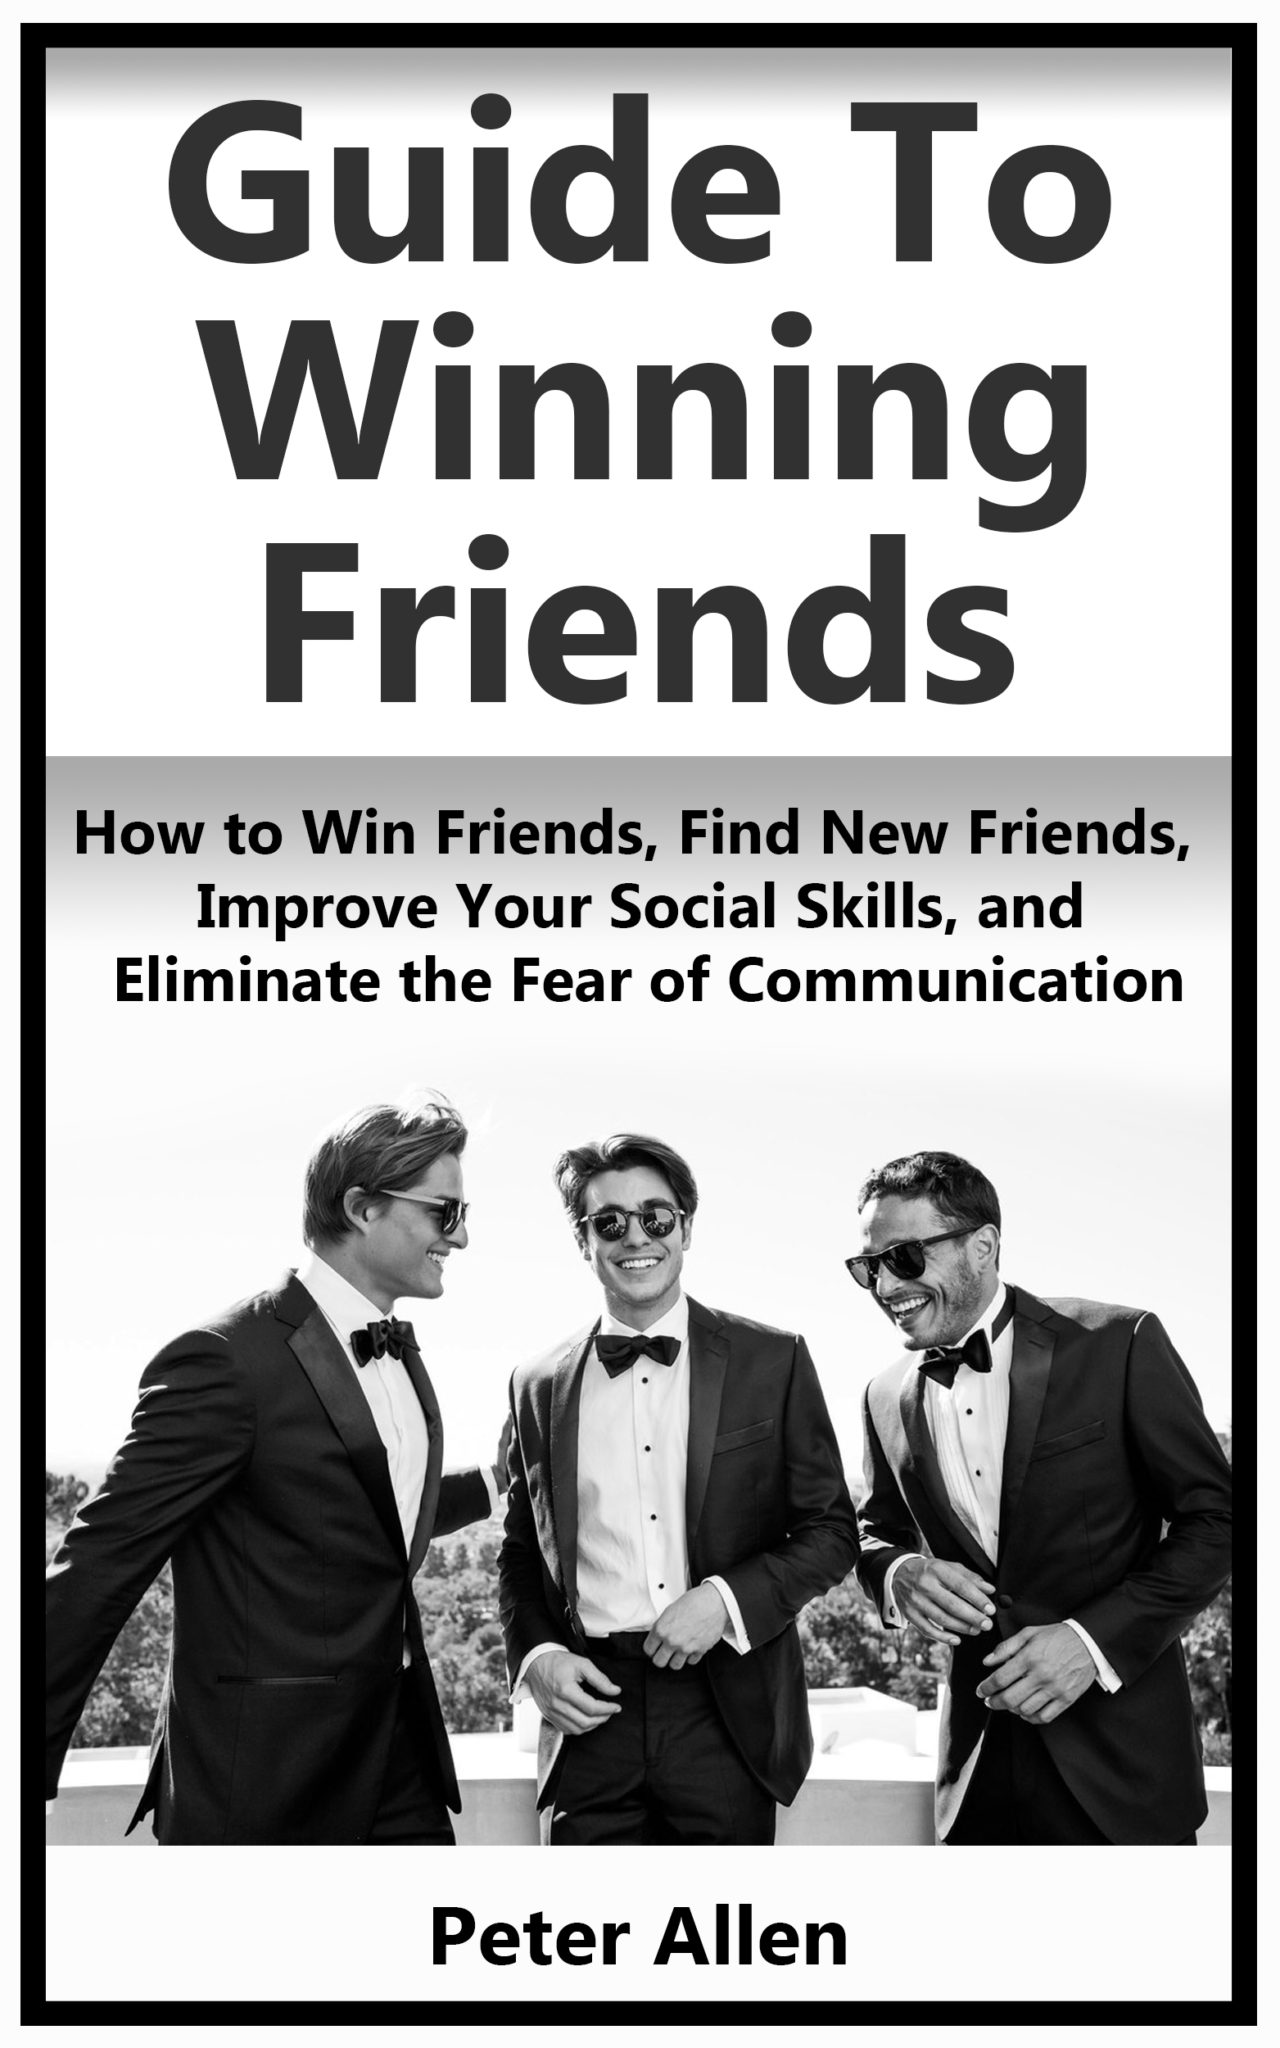 FREE: Guide to Winning Friends! by Peter Allen